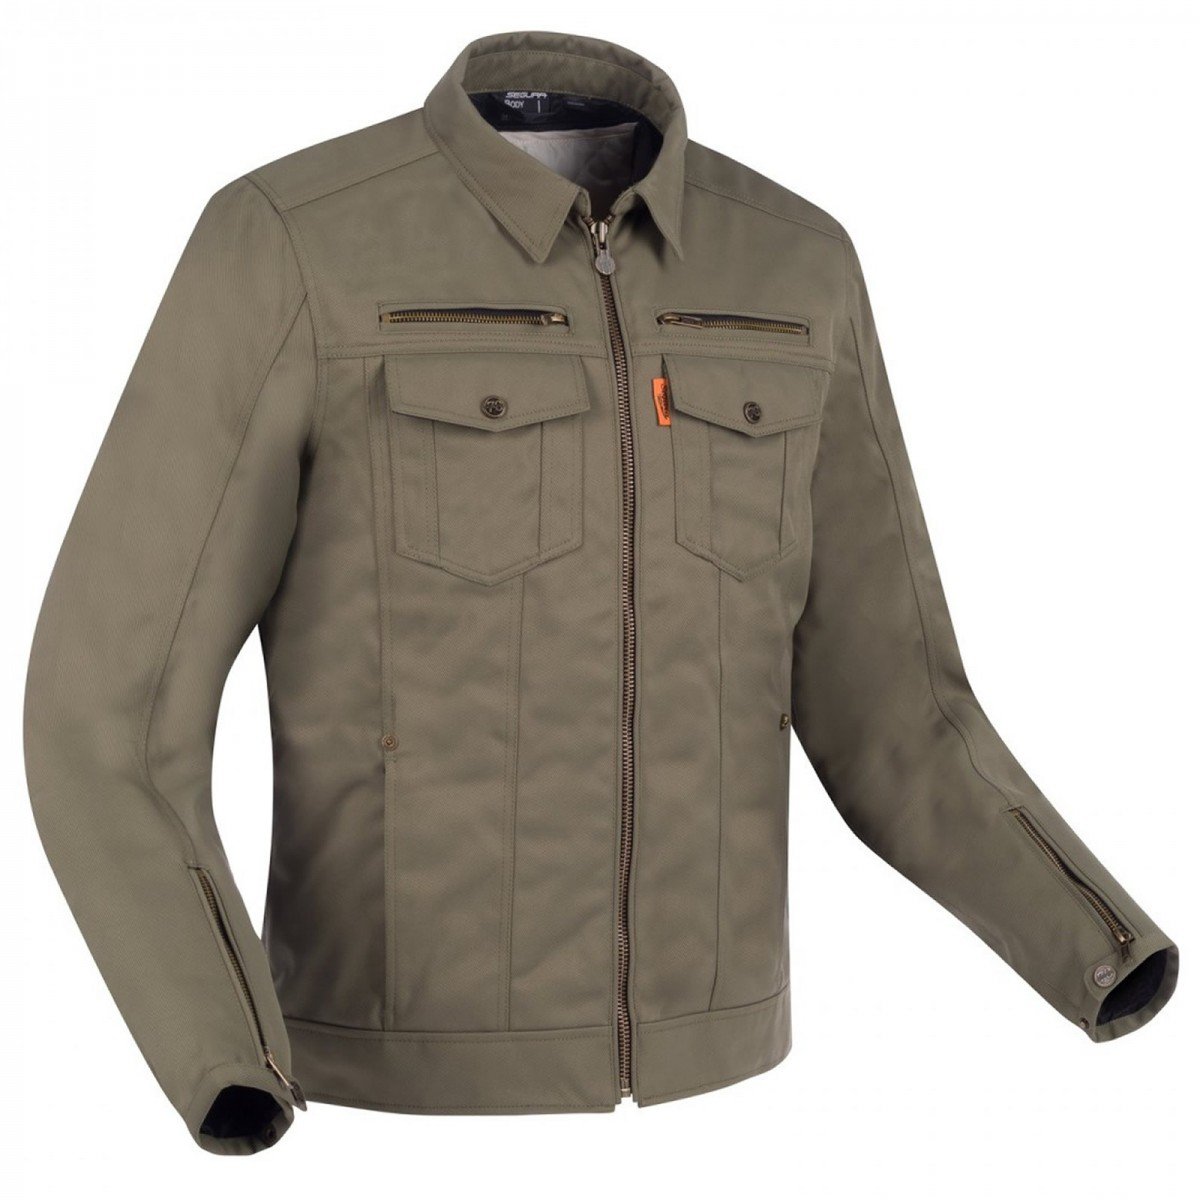 Image of Segura Patrol Jacket Khaki Size L ID 3660815163030